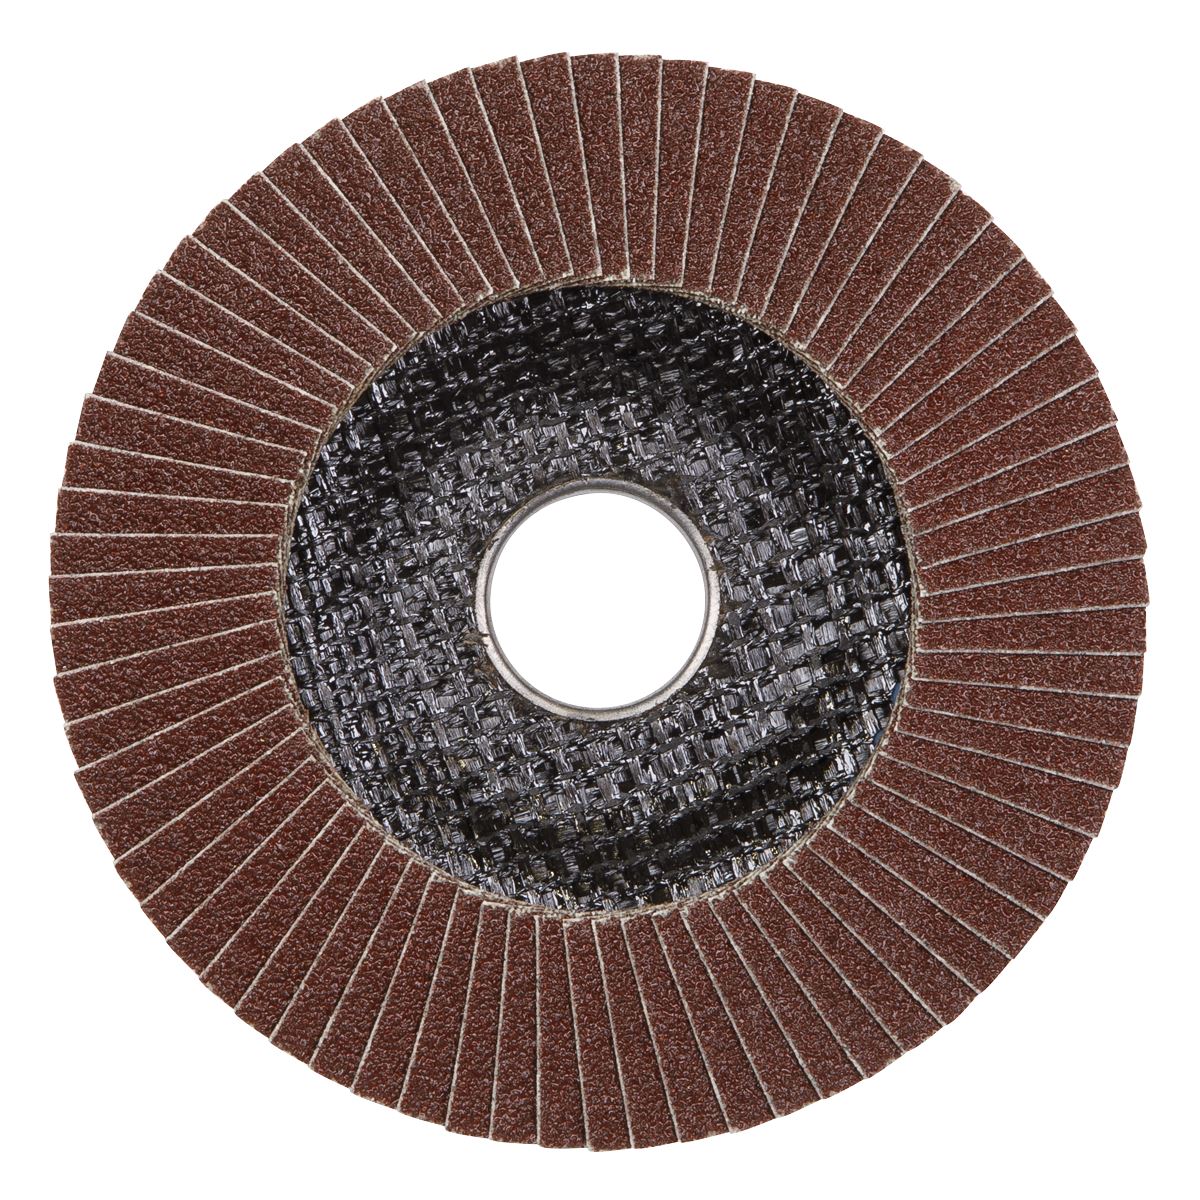 Sealey Flap Disc Aluminium Oxide Ø115mm Ø22mm Bore 60Grit